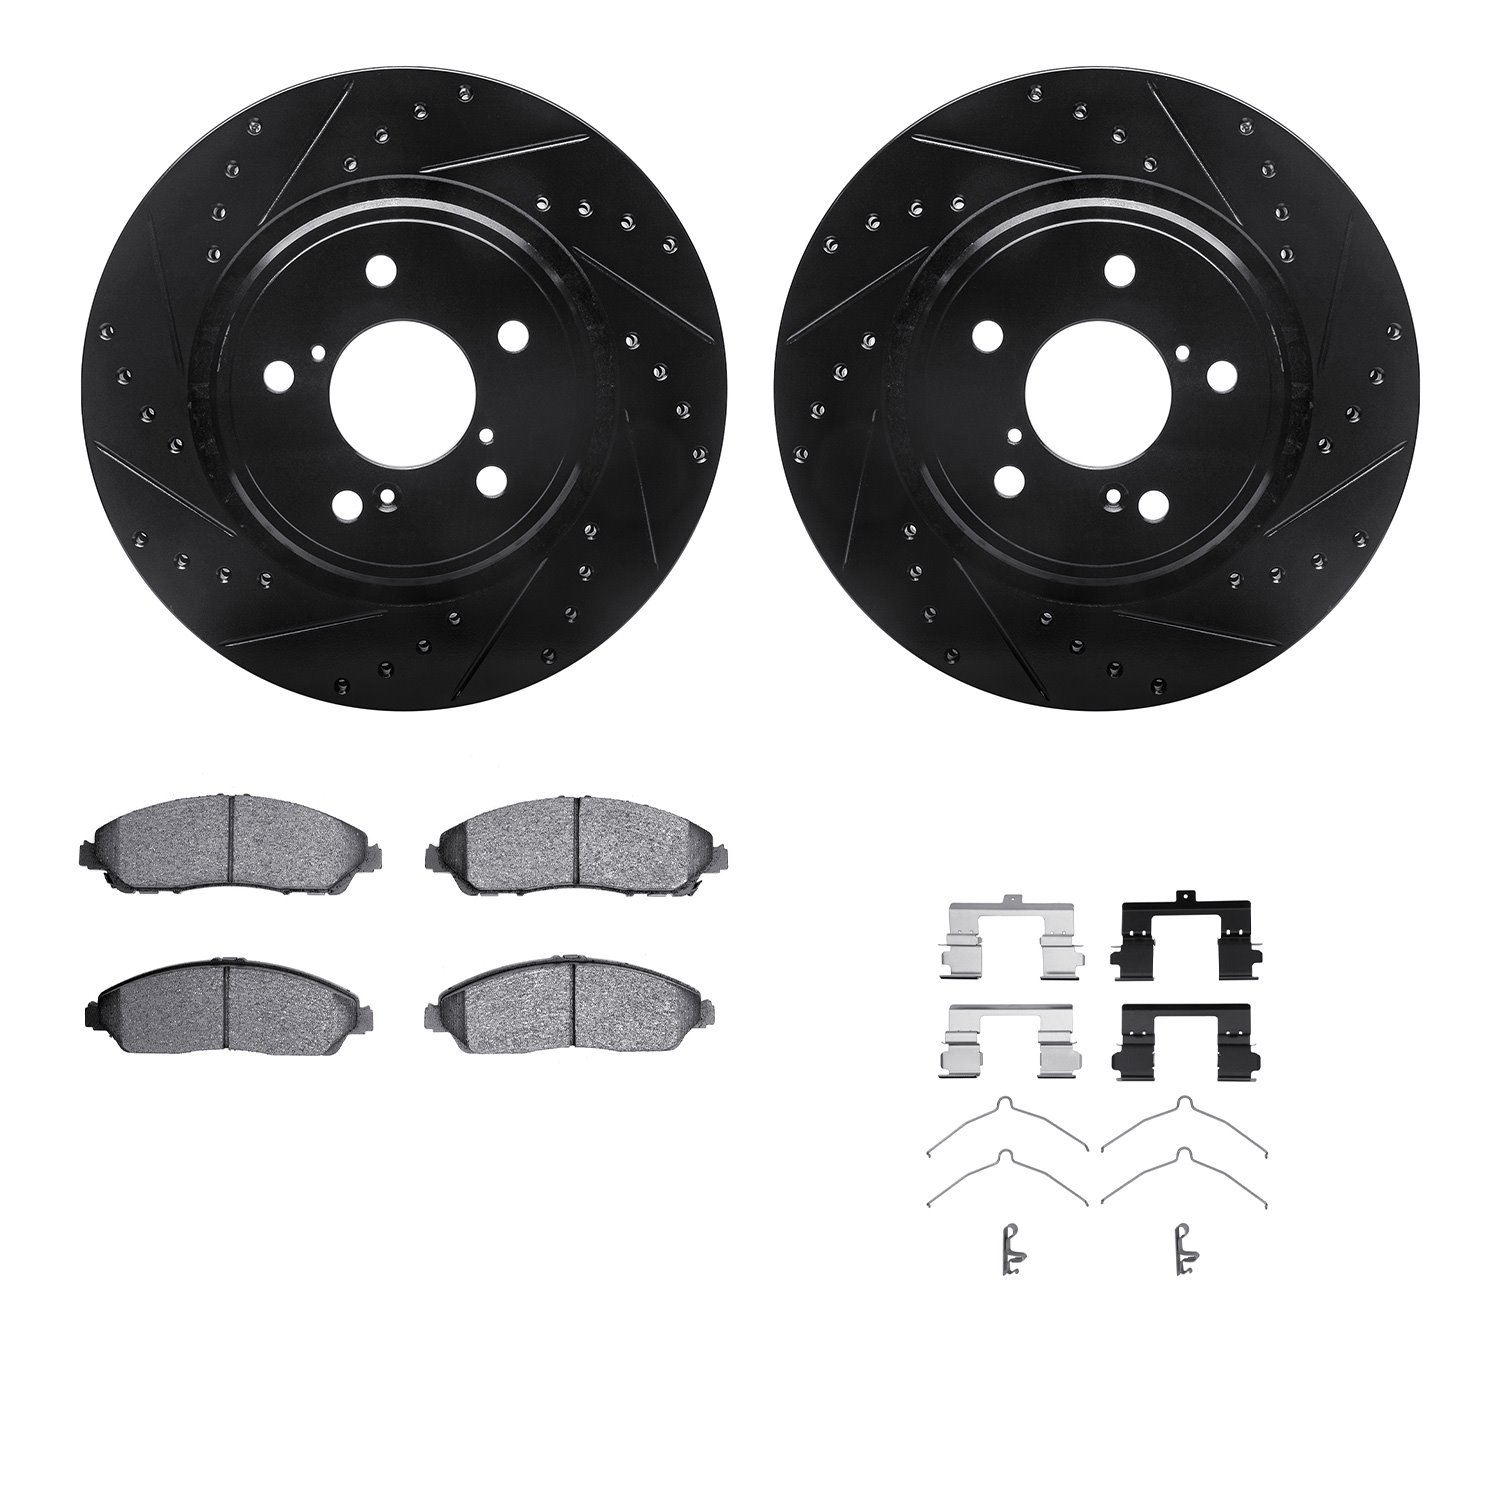 8312-59101 Drilled/Slotted Brake Rotors with 3000-Series Ceramic Brake Pads Kit & Hardware [Black], Fits Select Acura/Honda, Pos